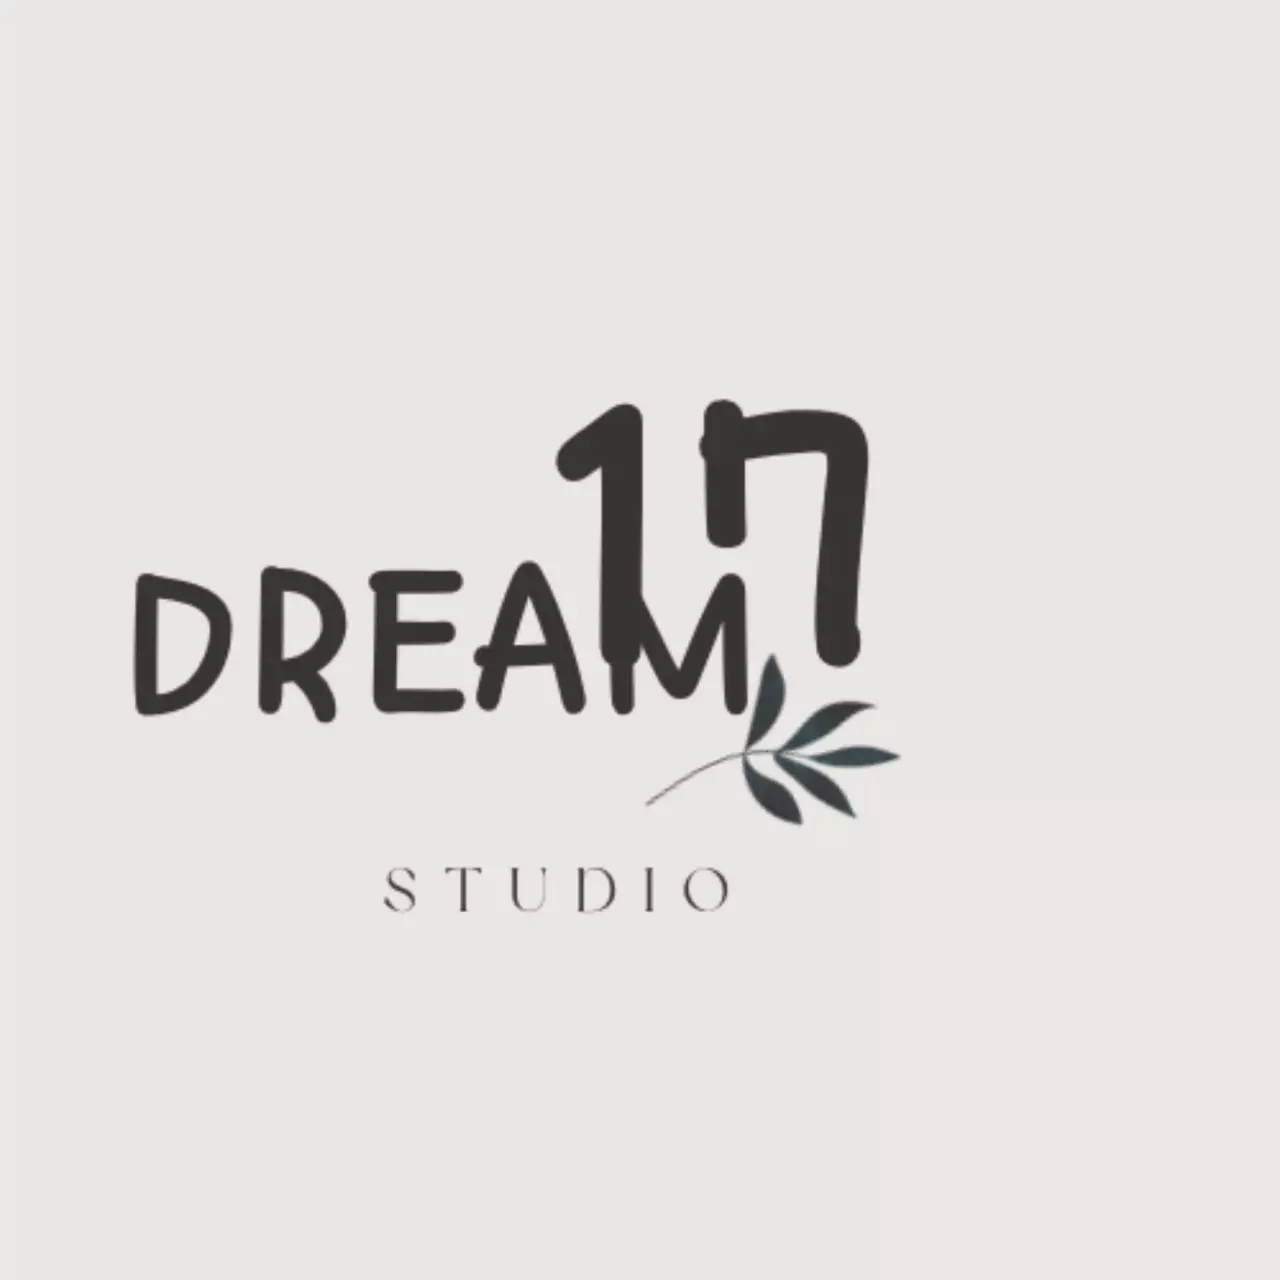 17dream.studio︱豐傑特約商家(專業的美容技巧及熱情服務態度)